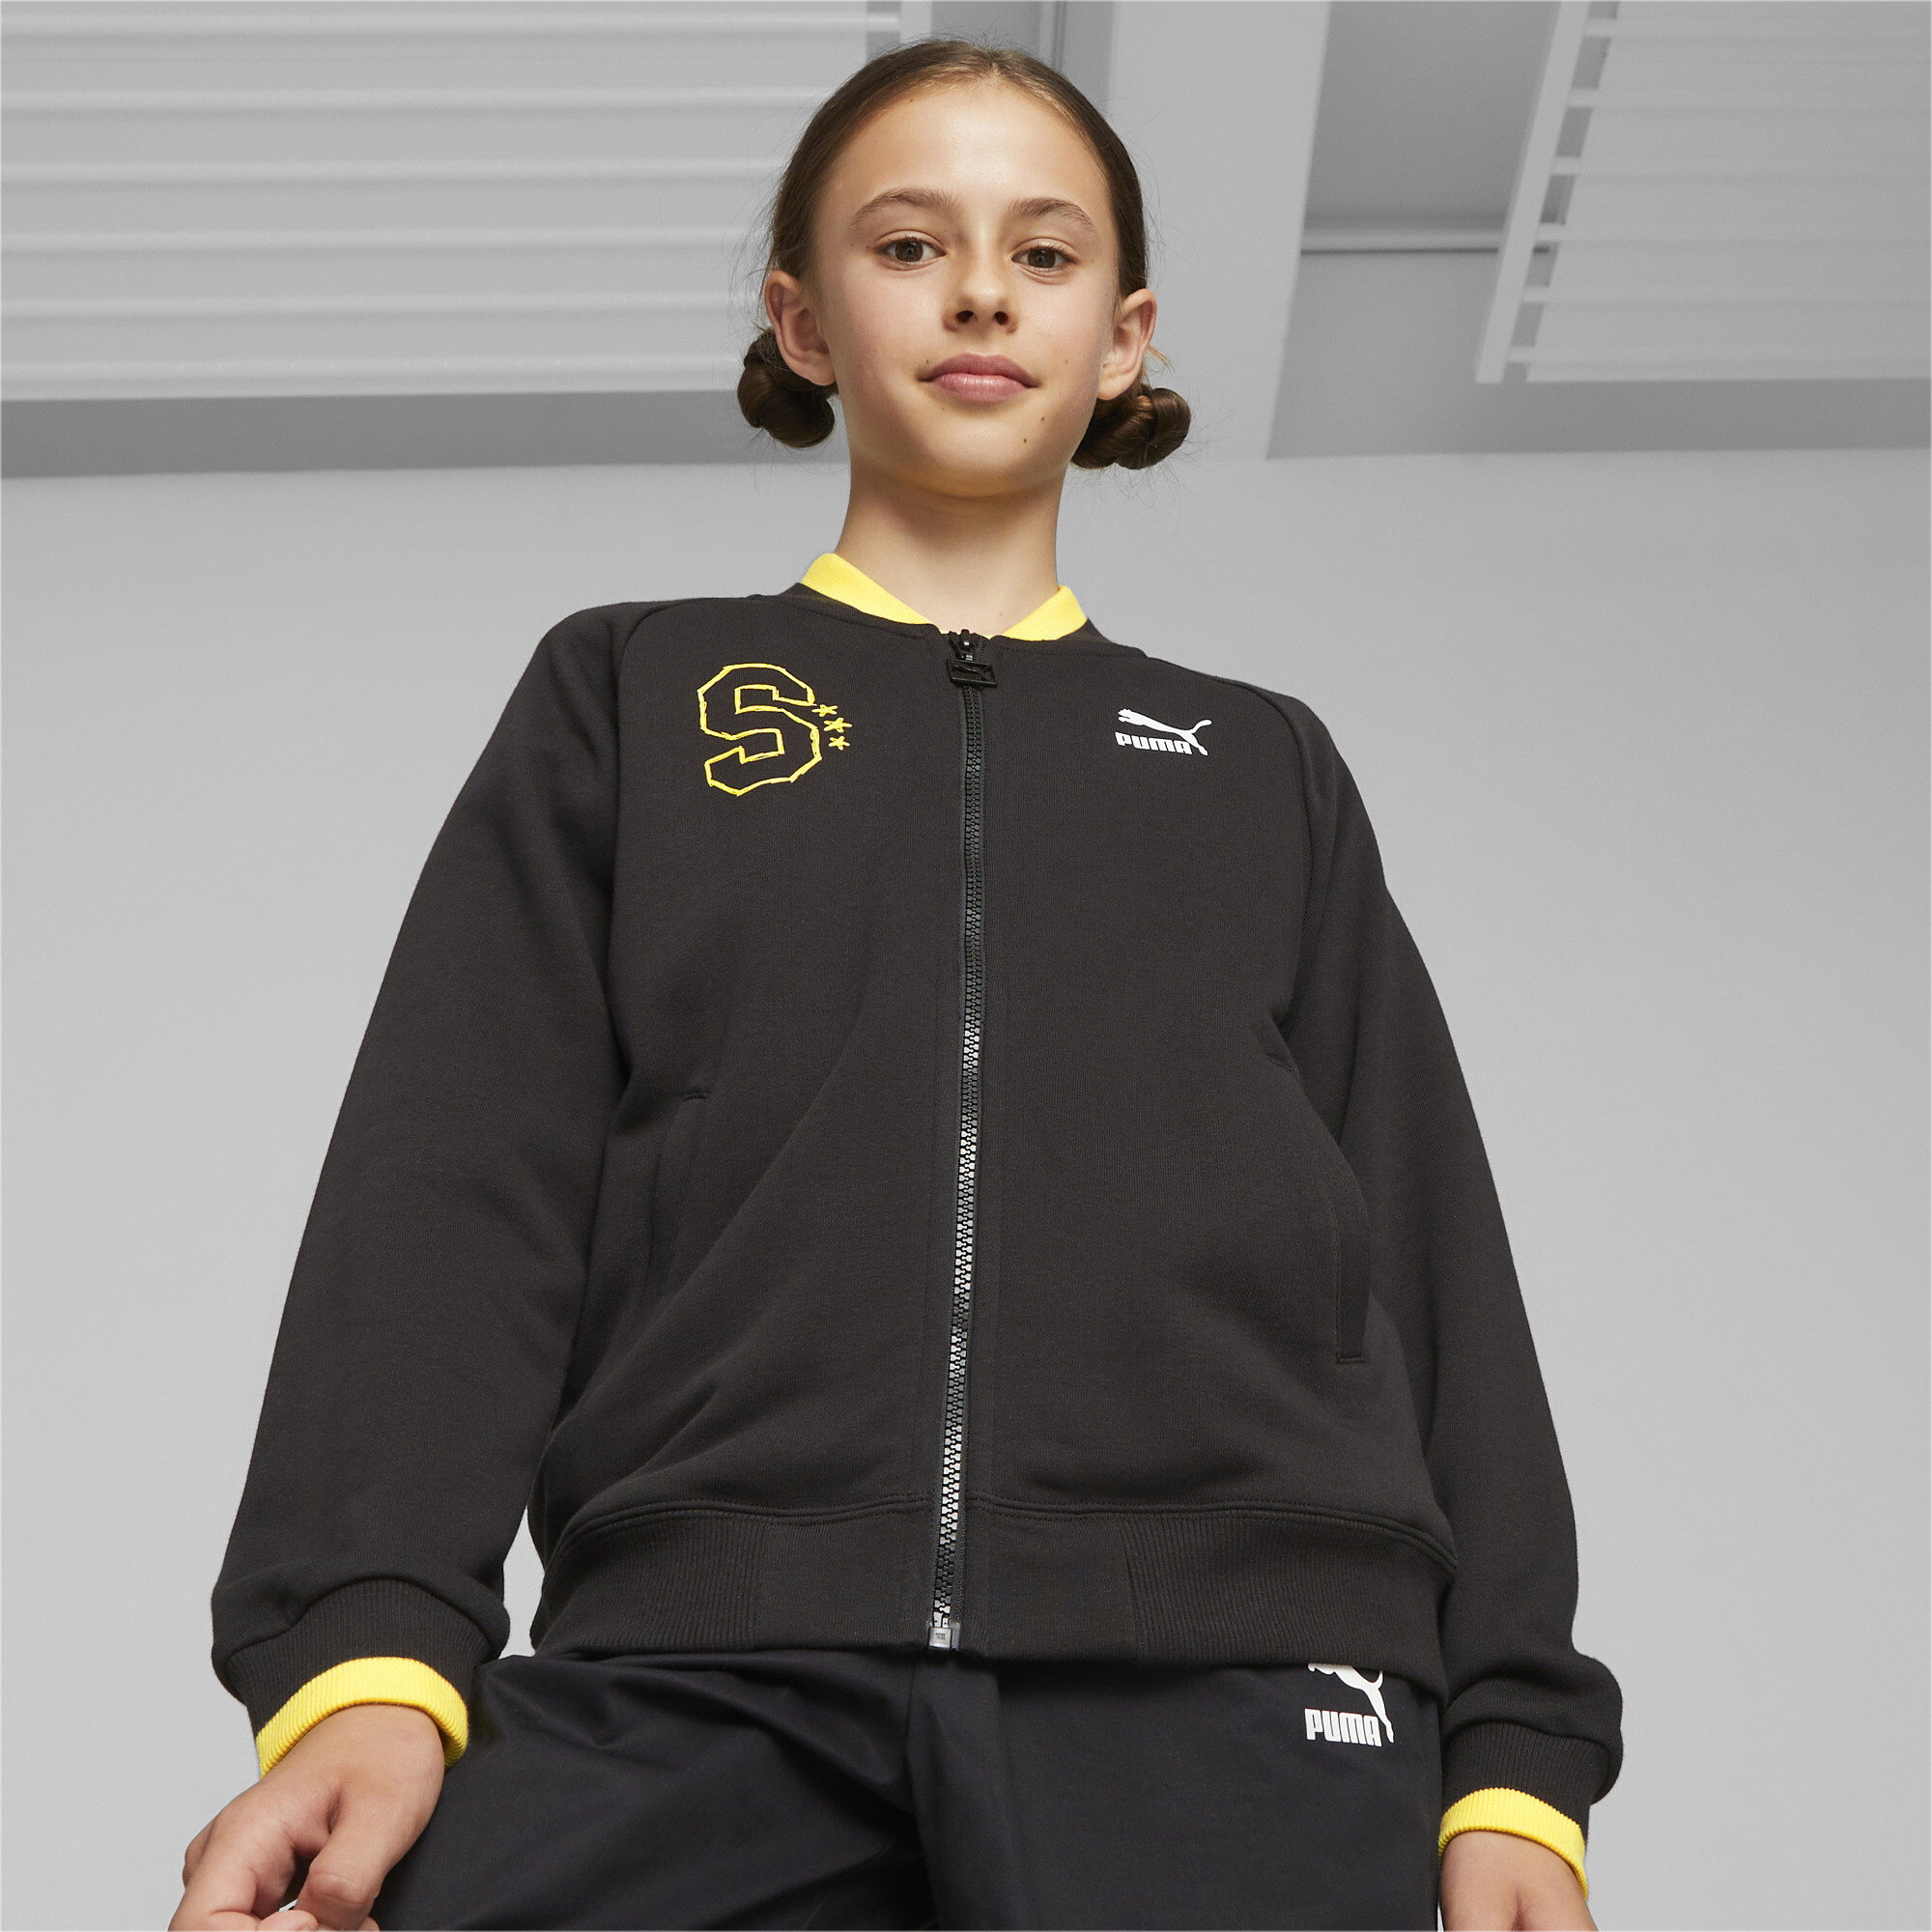 Puma X SPONGEBOB SQUAREPANTS Youth Jacket, Black, Size 15-16Y, Clothing